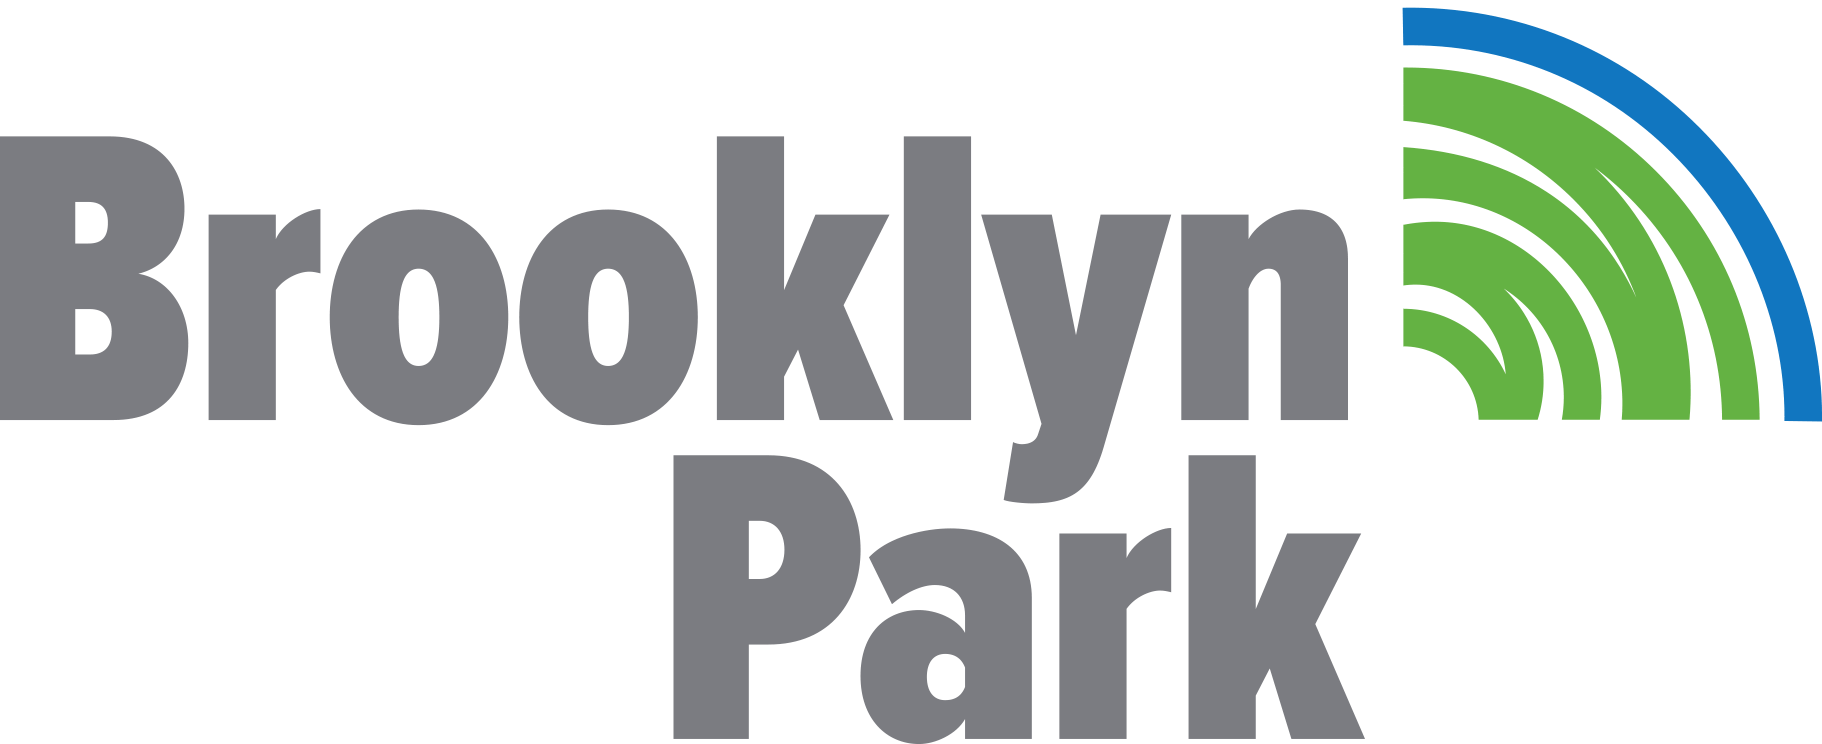 City of Brooklyn Park